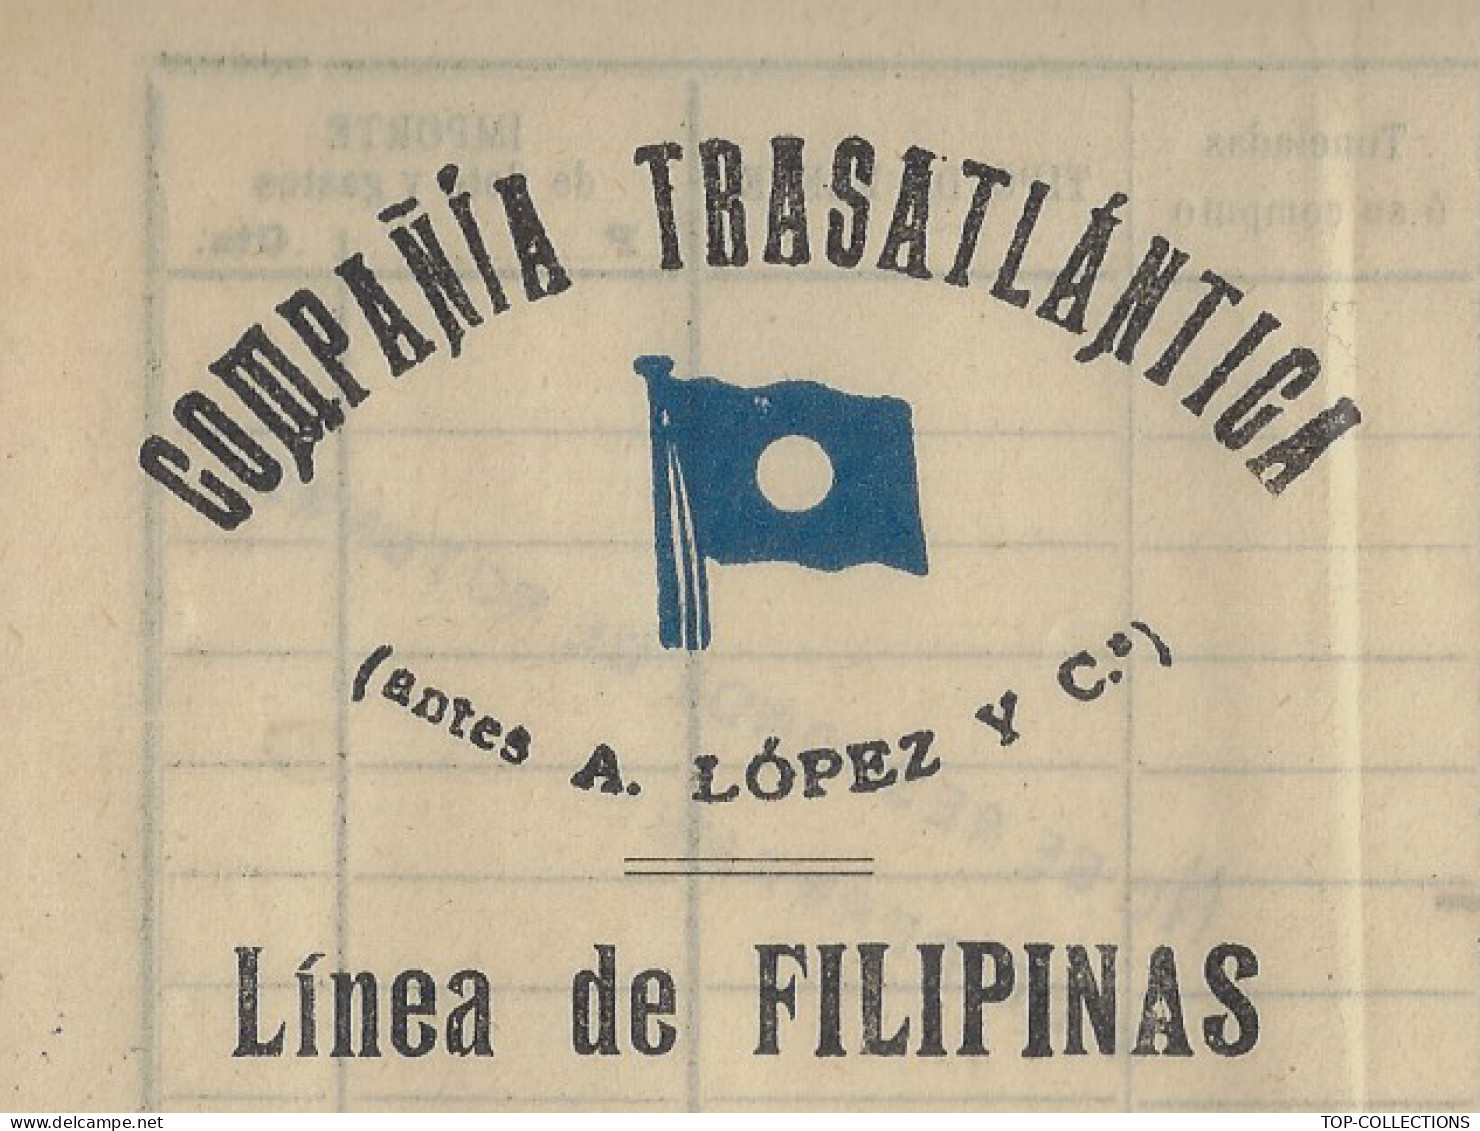 NAVIGATION 1915 ENTETE PAVILLON HOUSEFLAG BILL OFLADING Compania  Trasatlantica Cadiz V.HISTORIQUE - Espagne